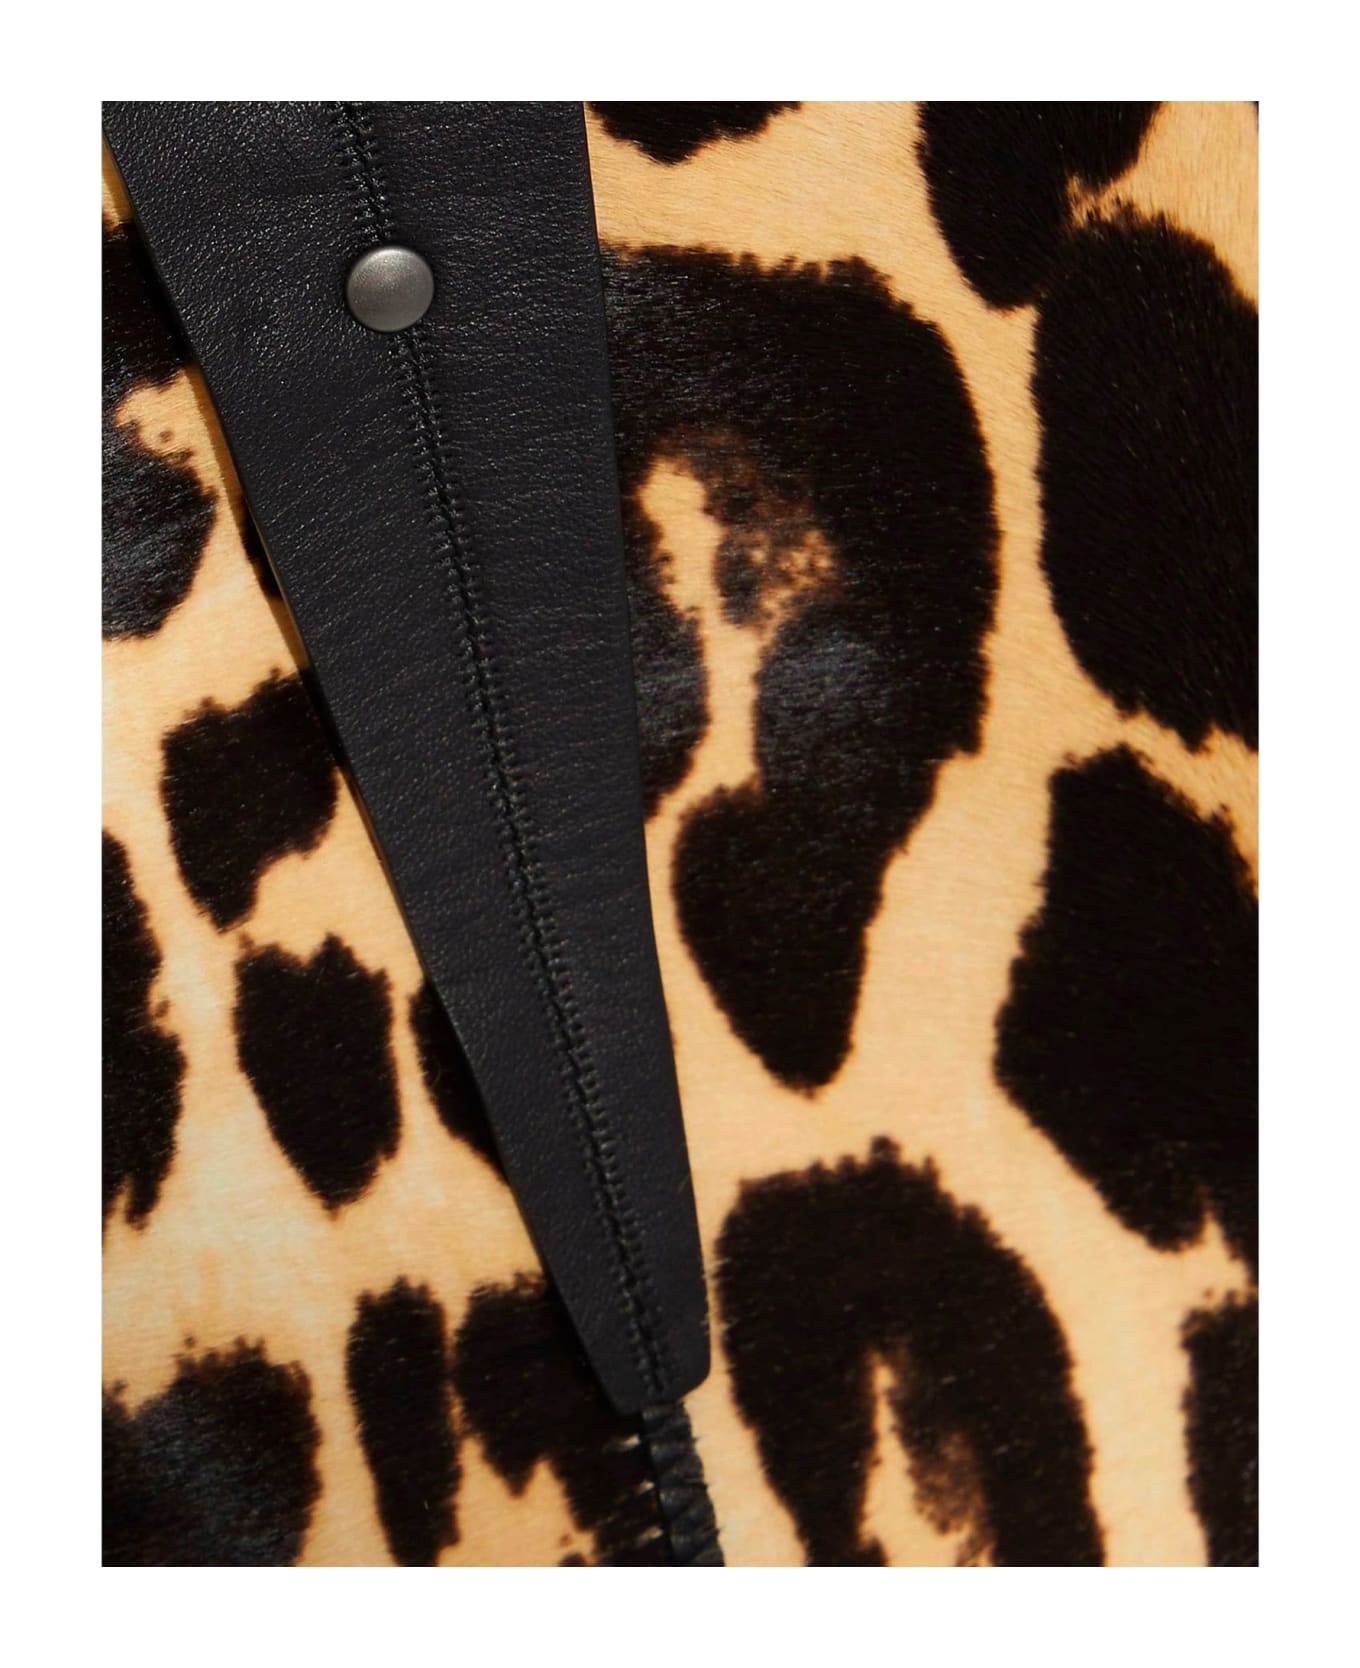 Bottega Veneta Leopard Print Calf Hair Skirt - Brown